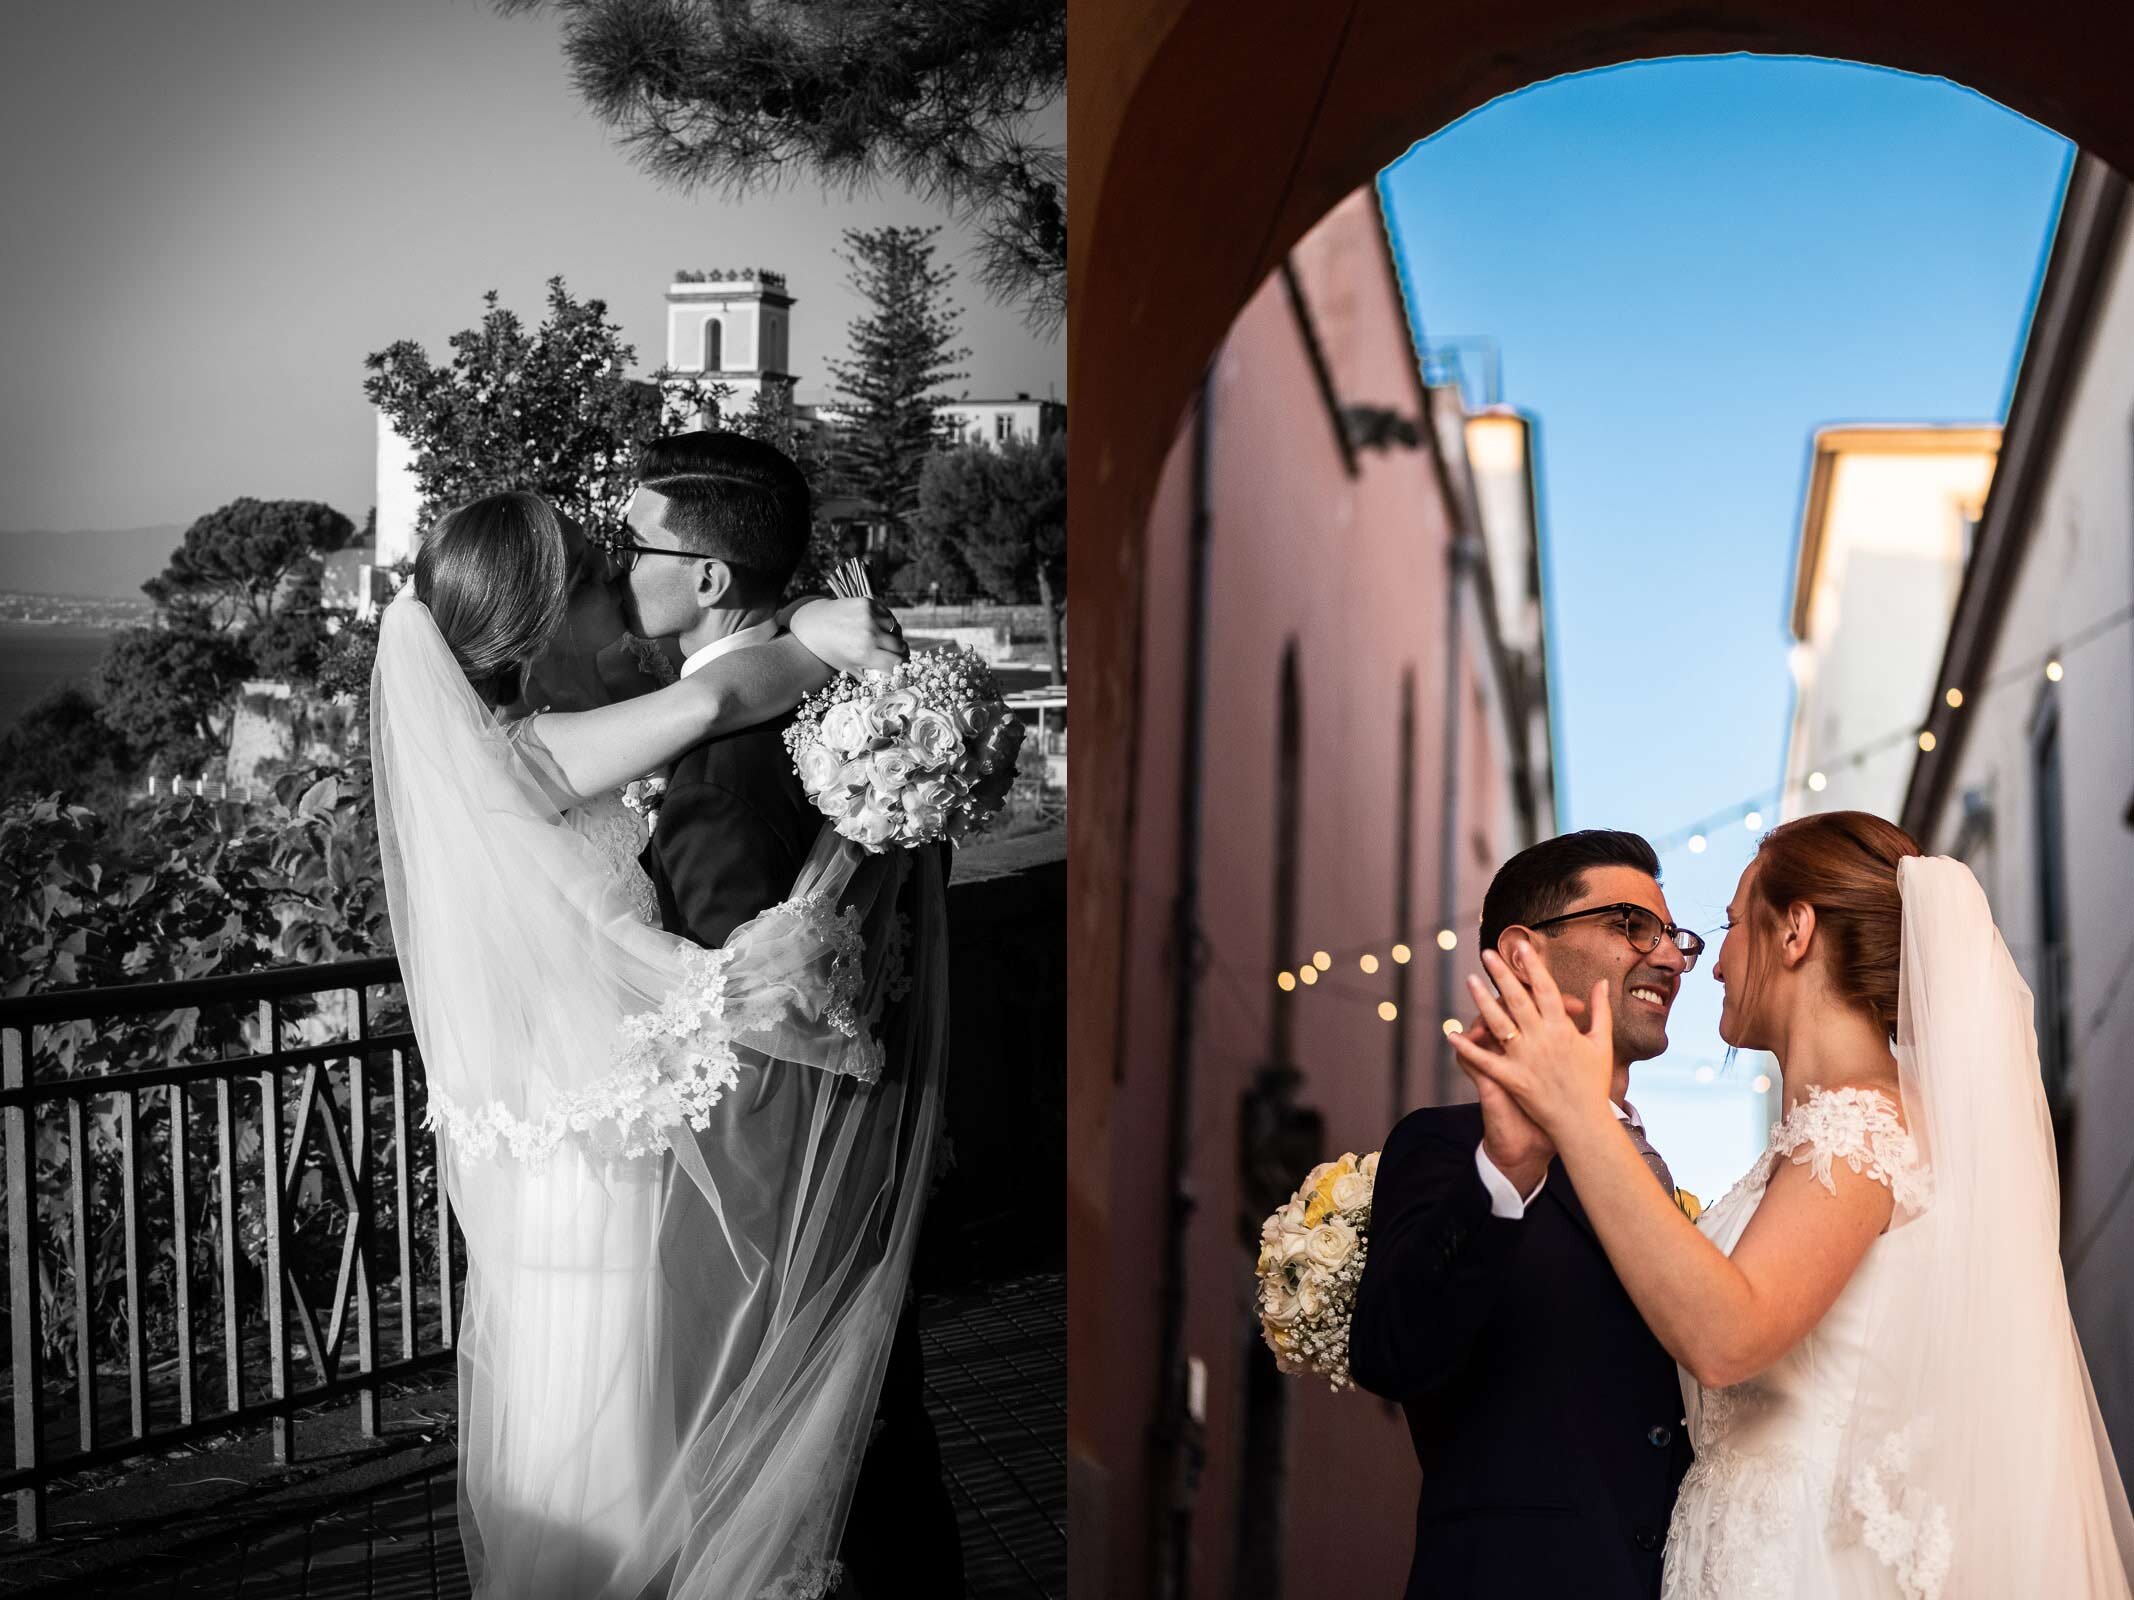 00012-Fotografo-Matrimonio-VicoEquense-fotografo-Sorrento-Napoli-Wedding-Amalfi-Coast-Photographer-VincentAiello.jpg